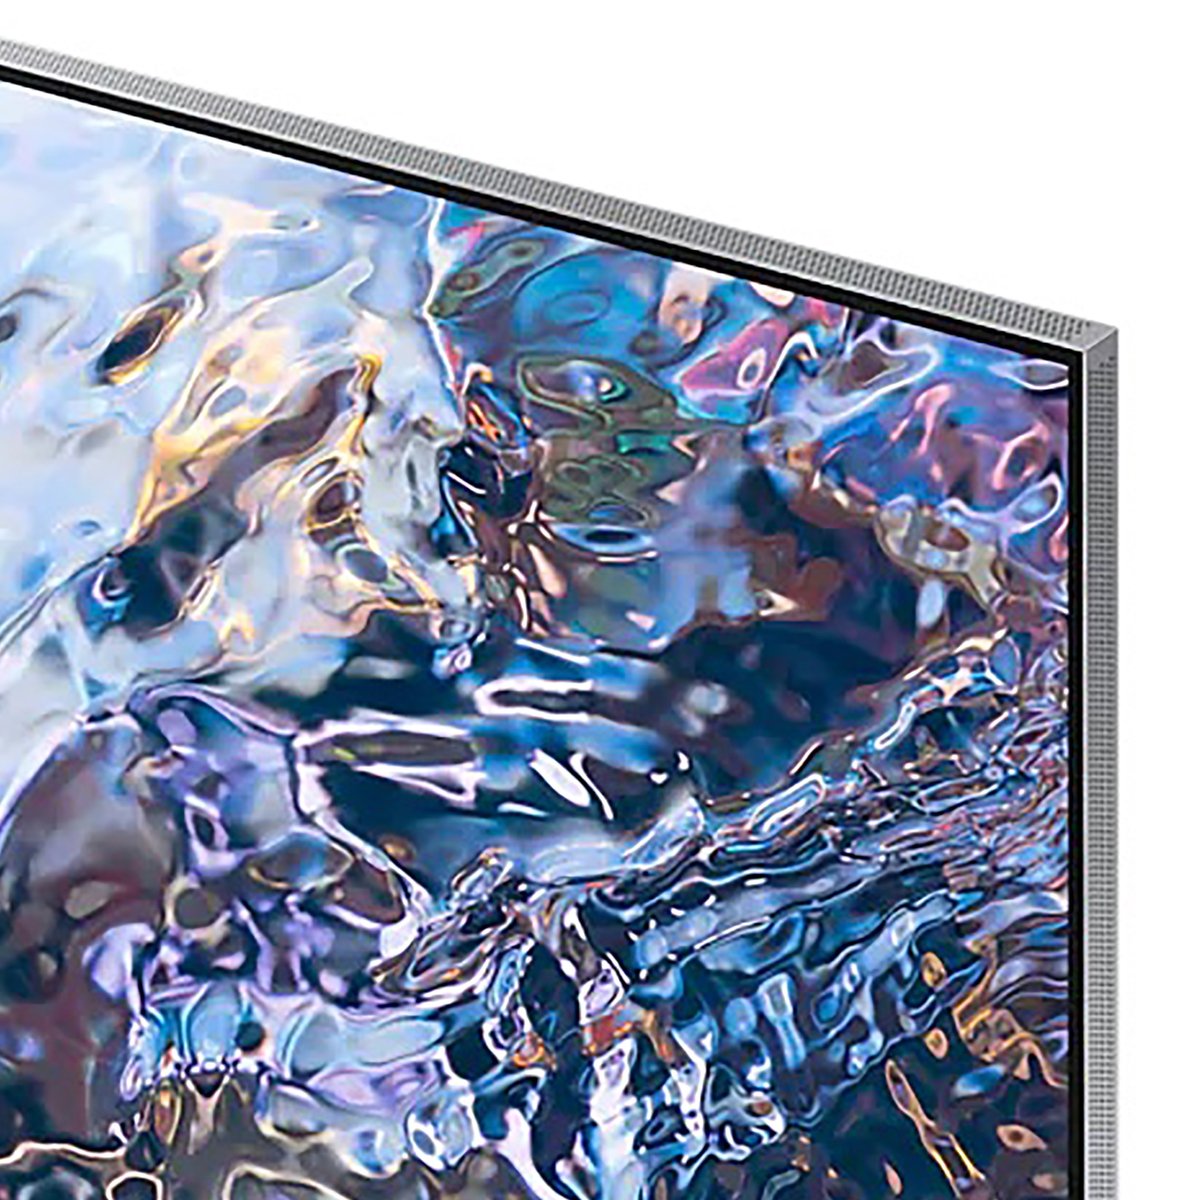 Samsung Neo QLED LED TV QA65QN700AUXZN 65 inch